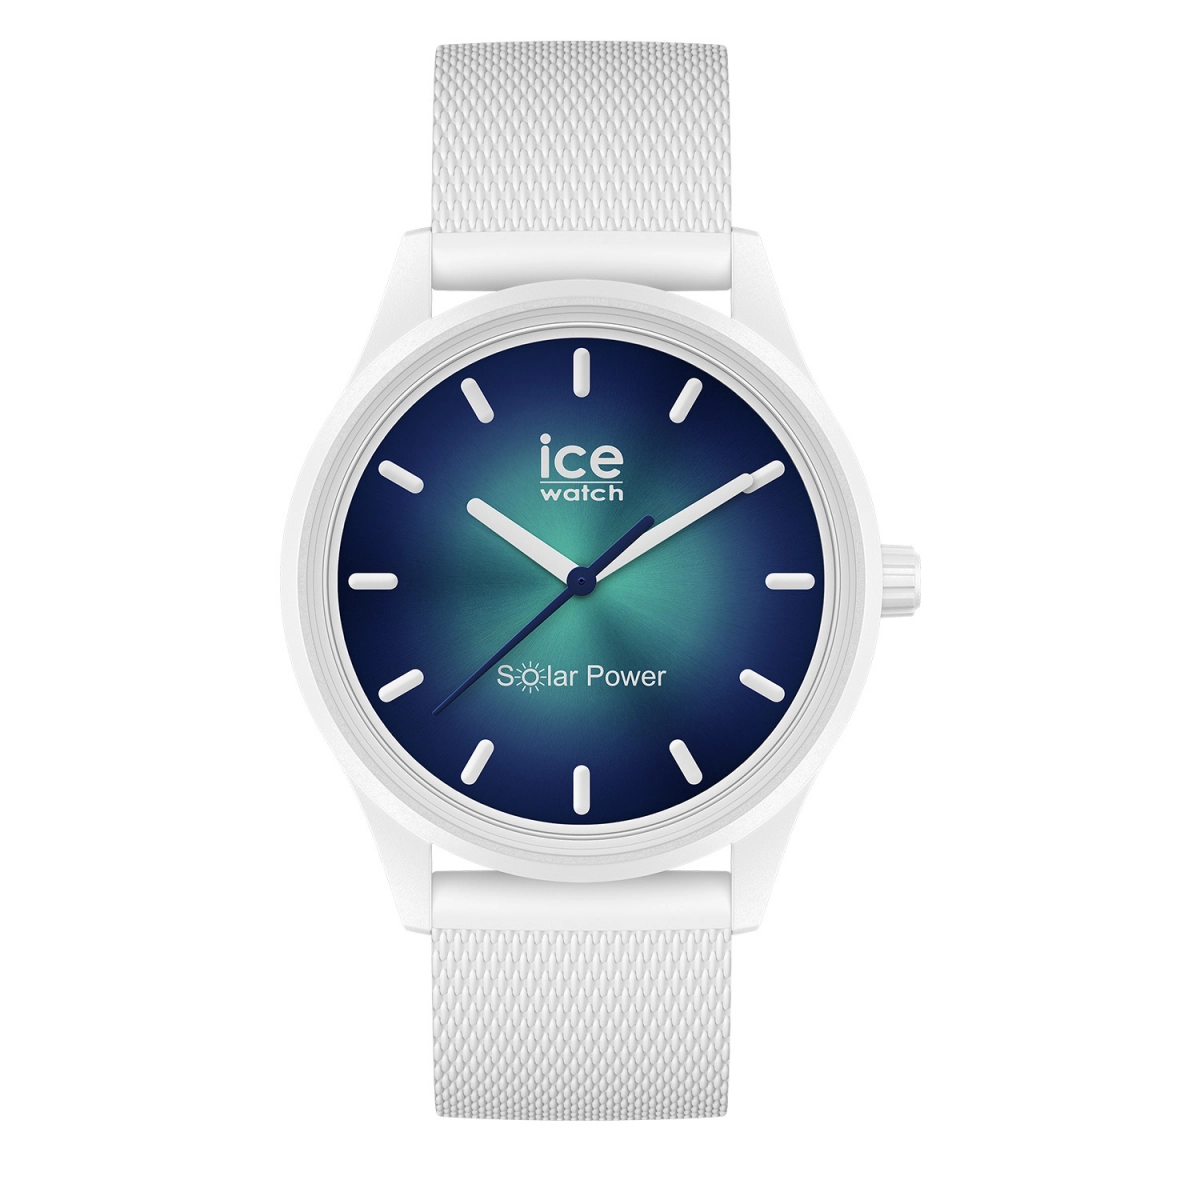 RELOJ ANALOGICO DE UNISEX ICE IW019028 Ice watch